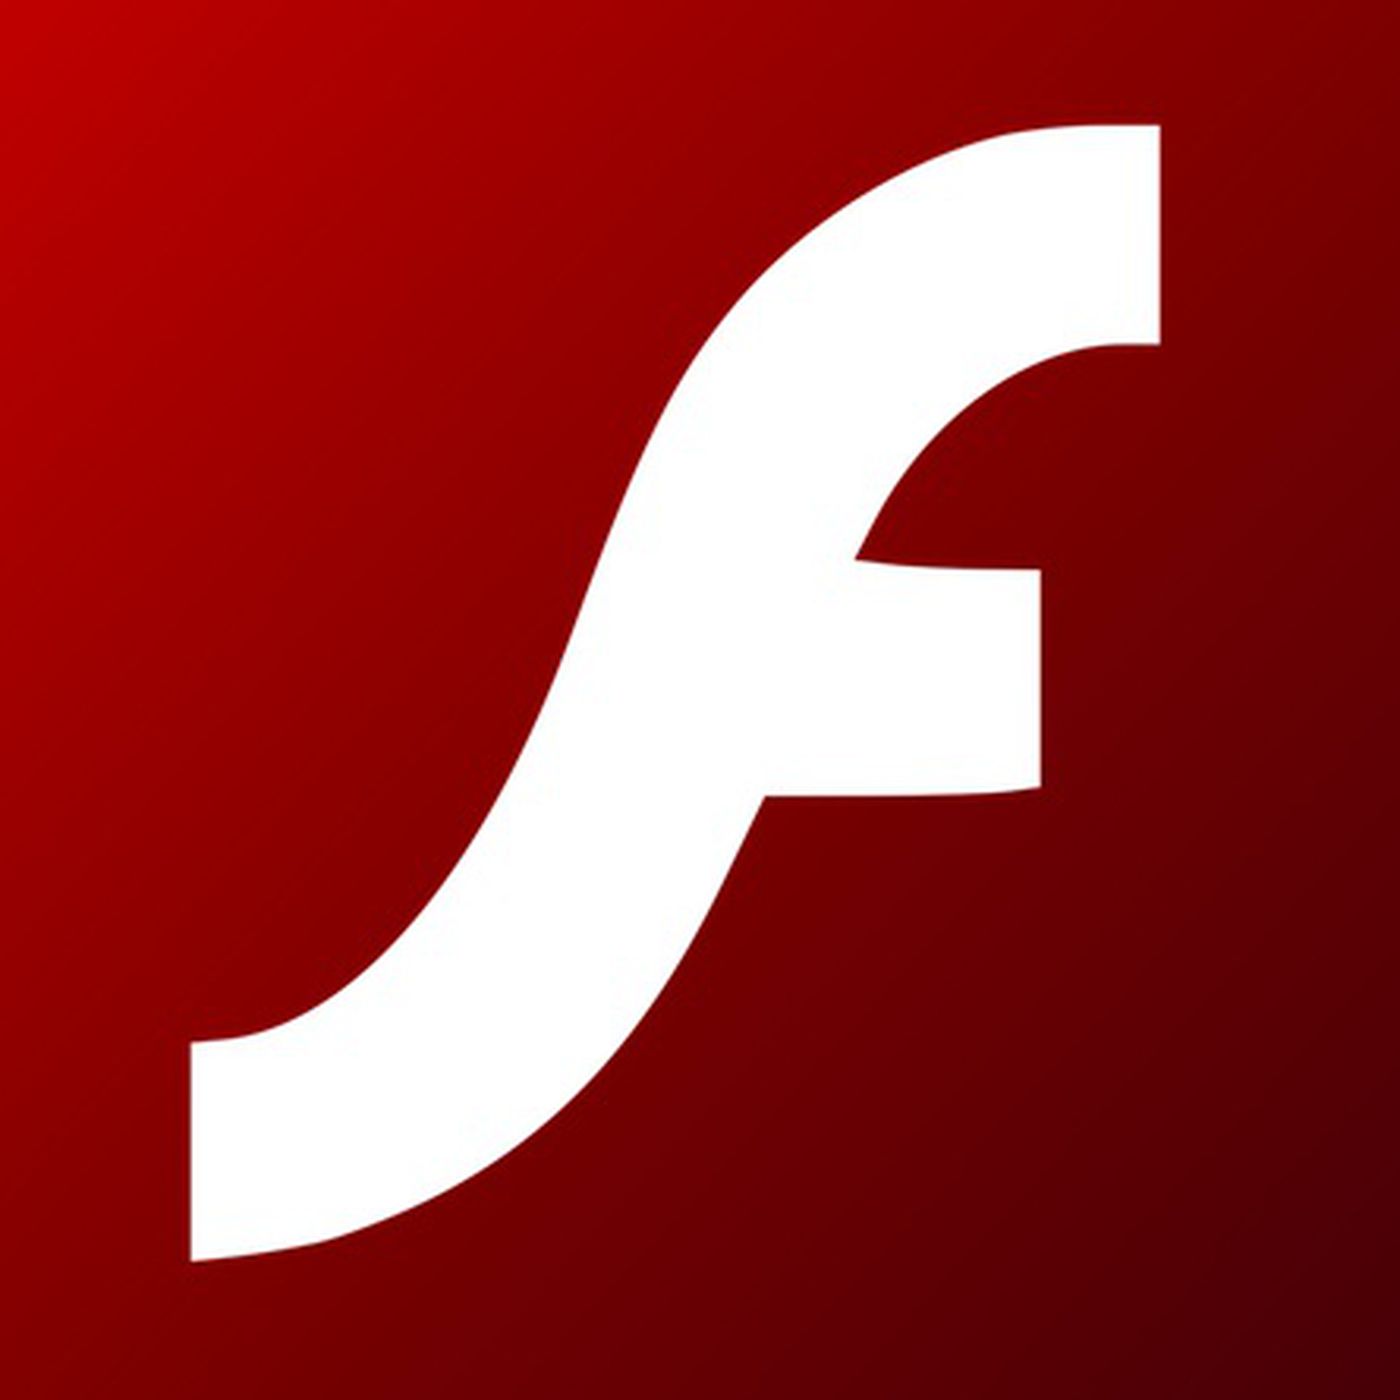 pengertian Adobe Flash adalah